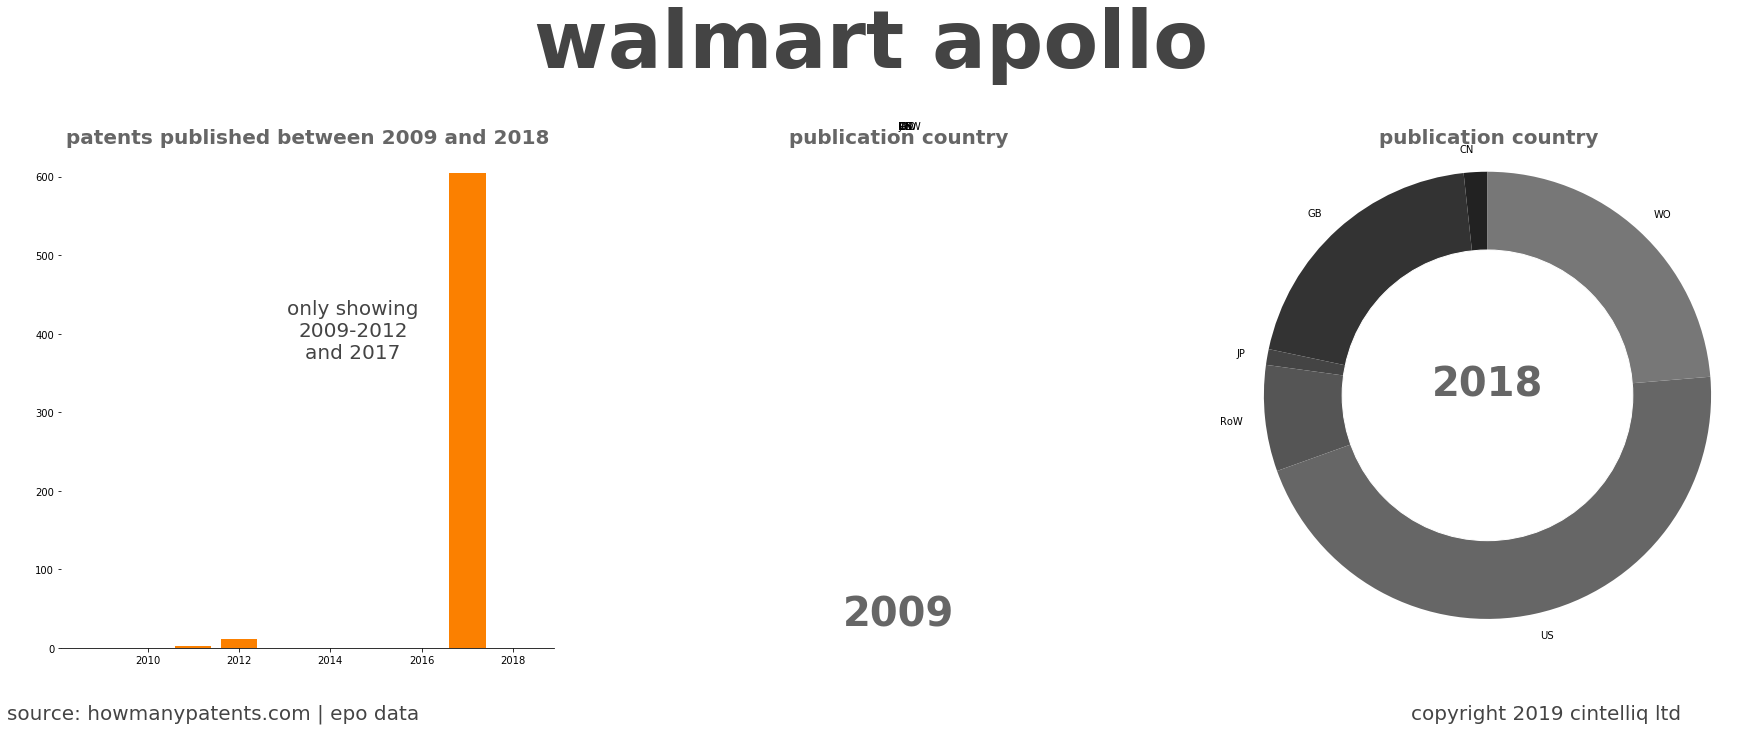 summary of patents for Walmart Apollo